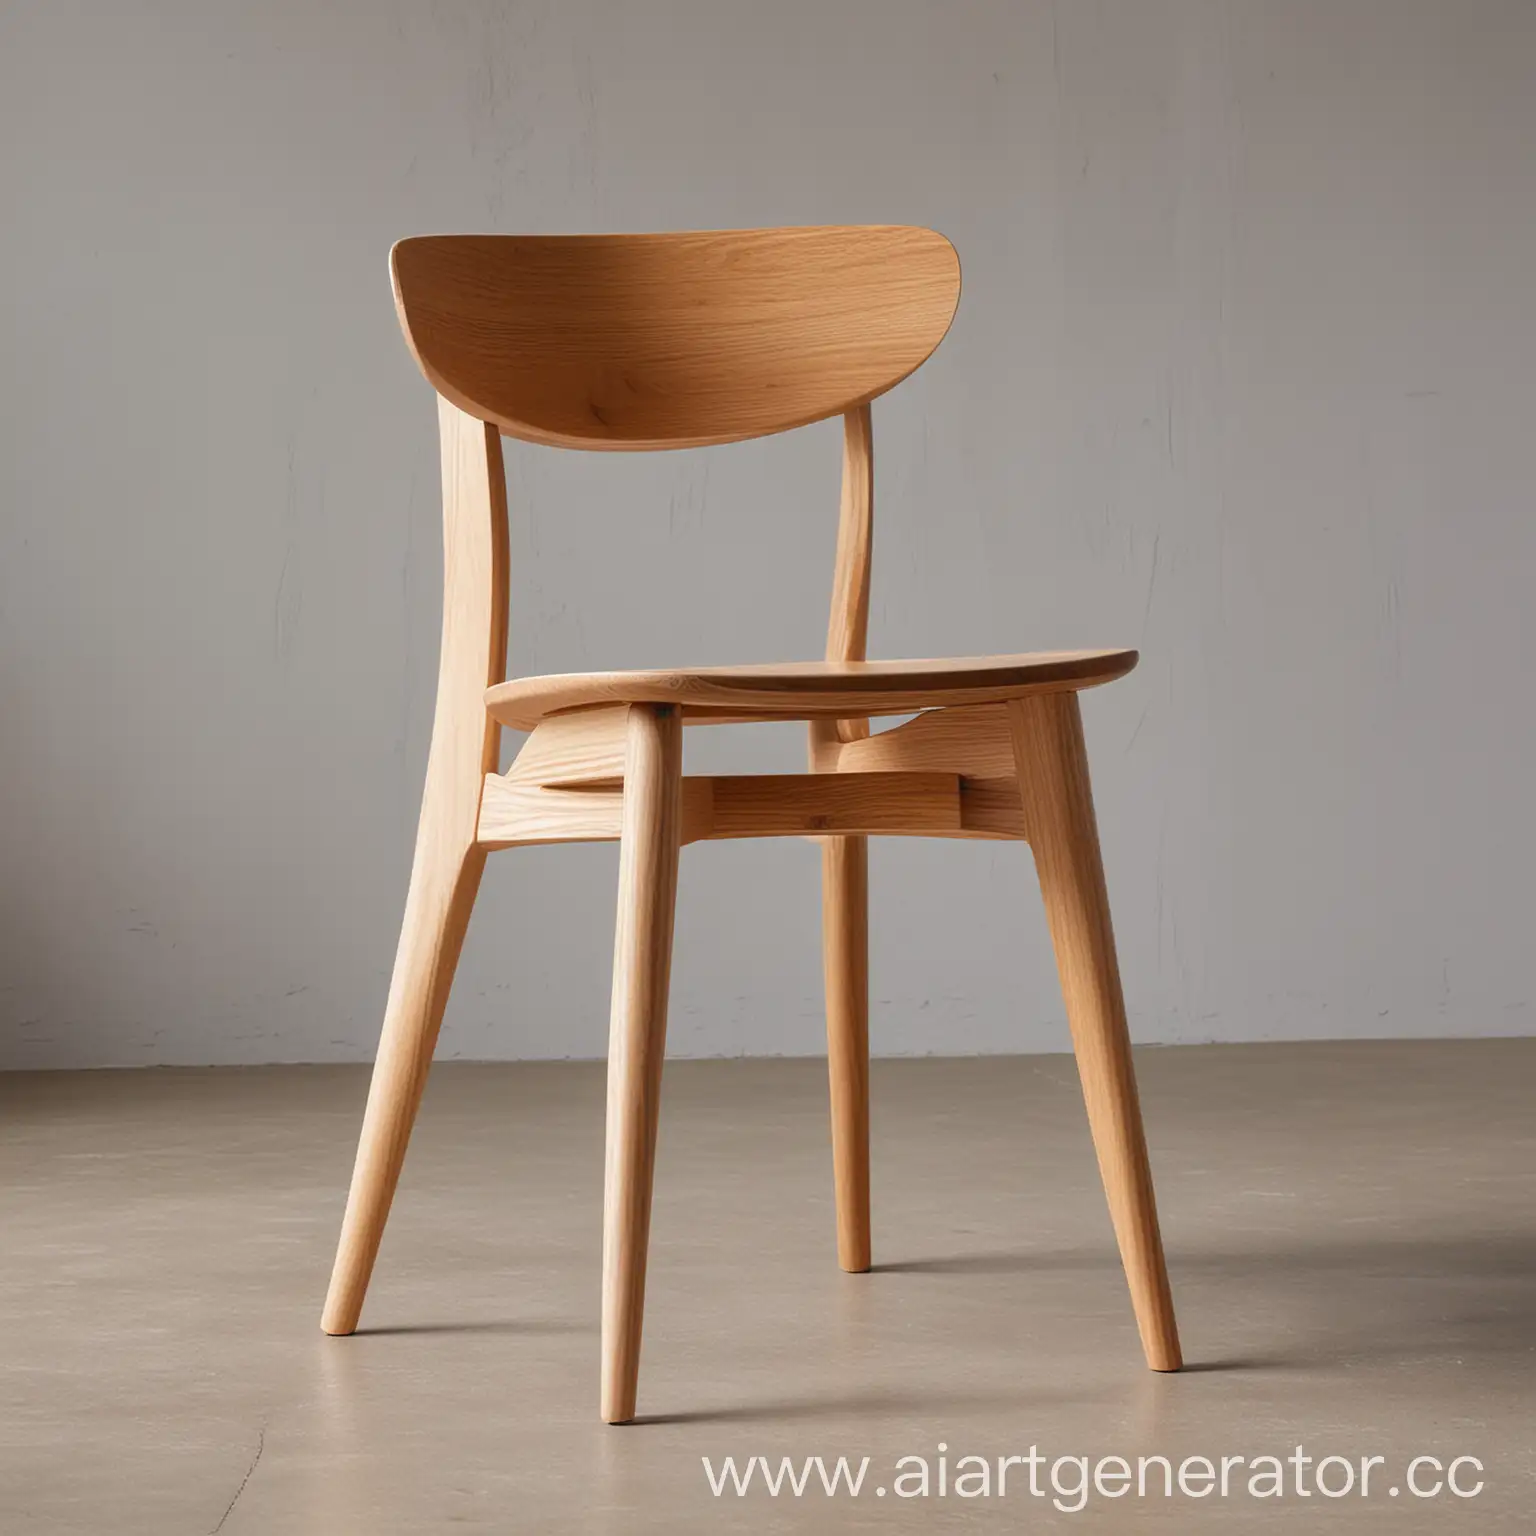  Modern Wooden dining chair